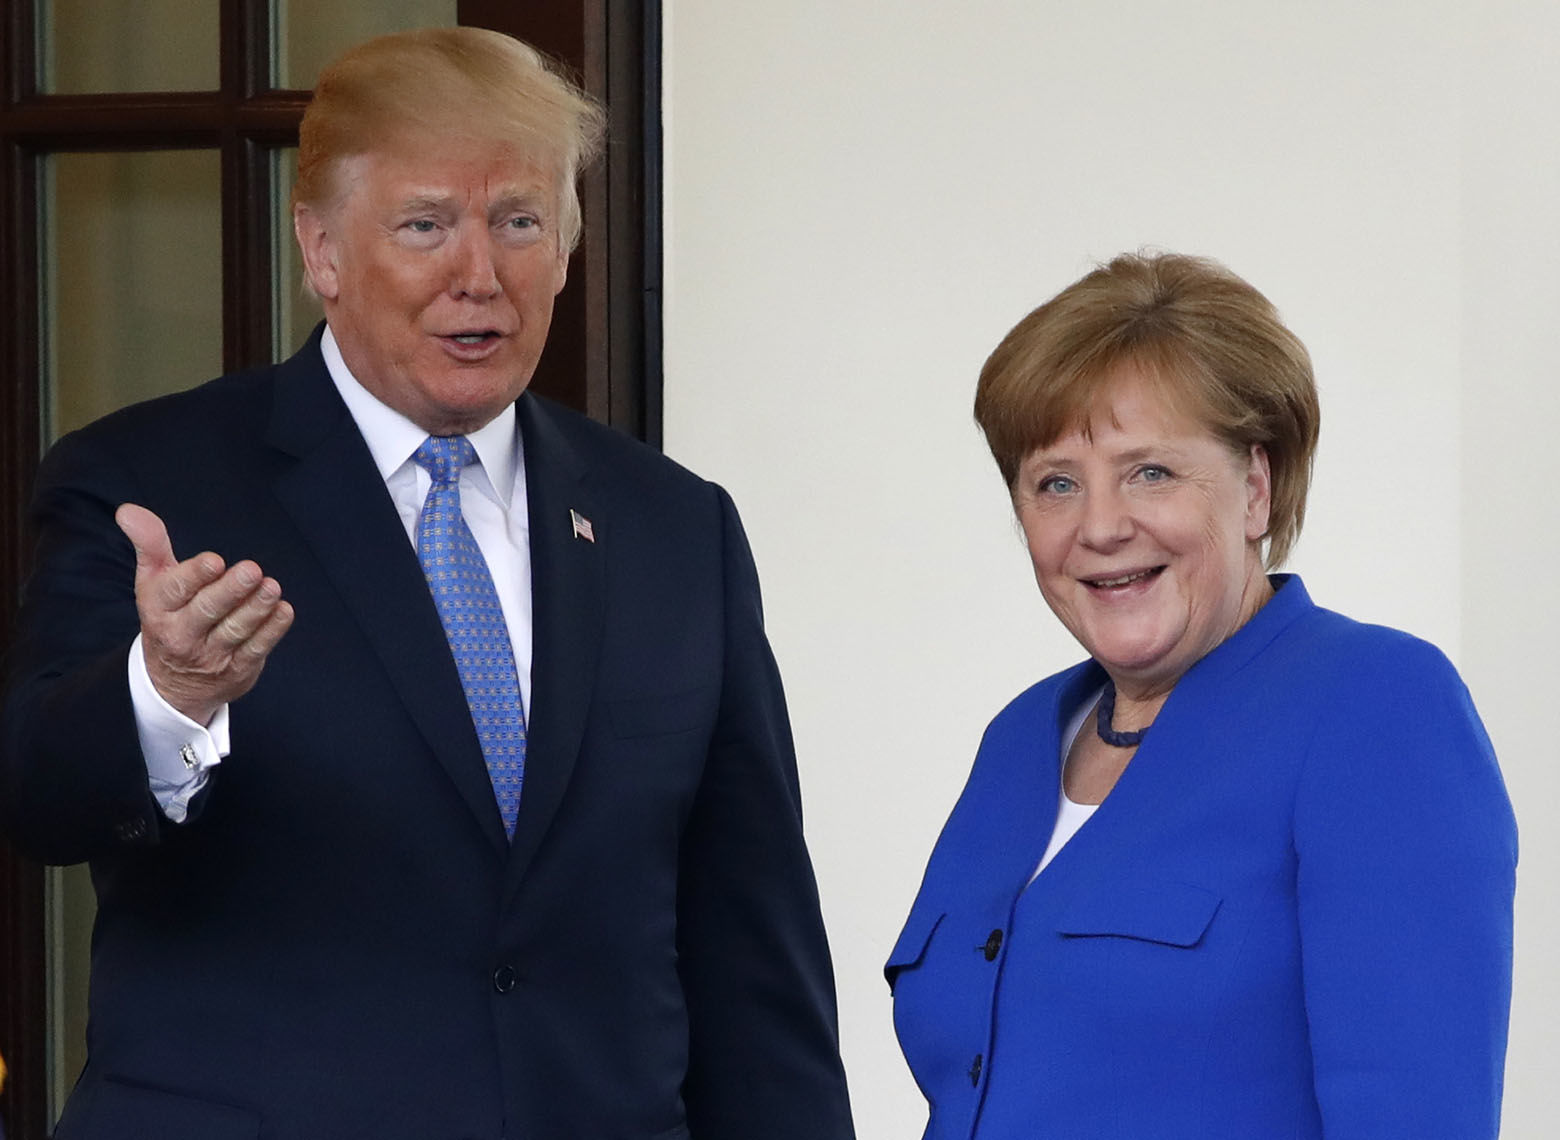 President Donald Trump greets German Chancellor Angela Merkel, Friday April 27, 2018, at the White House in Washington. (AP Photo/Jacquelyn Martin)